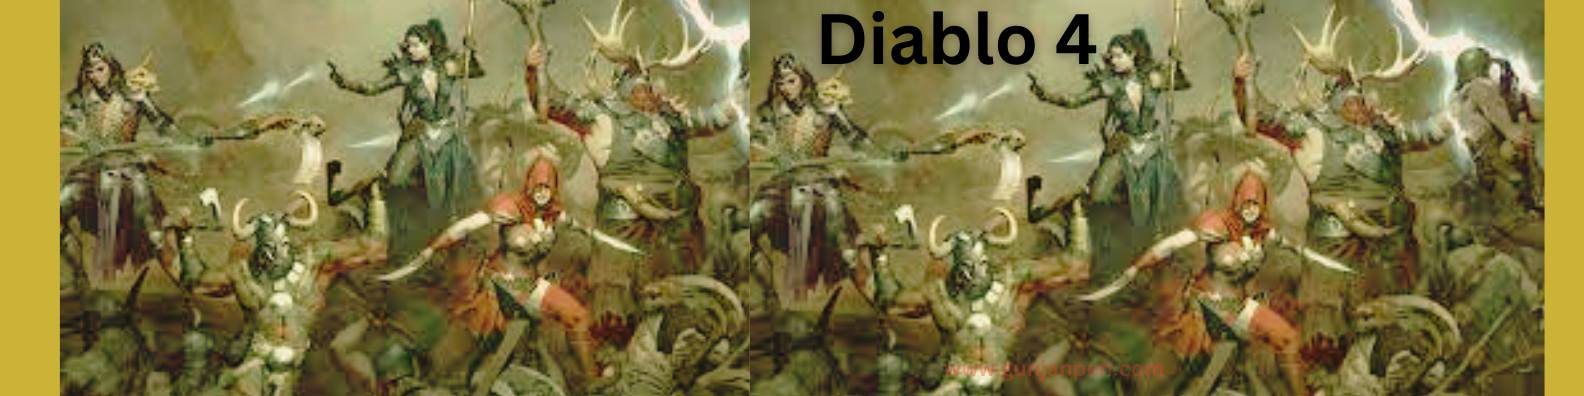 Diablo 4: Unleash Hell on Steam - The Latest Gaming Sensation!